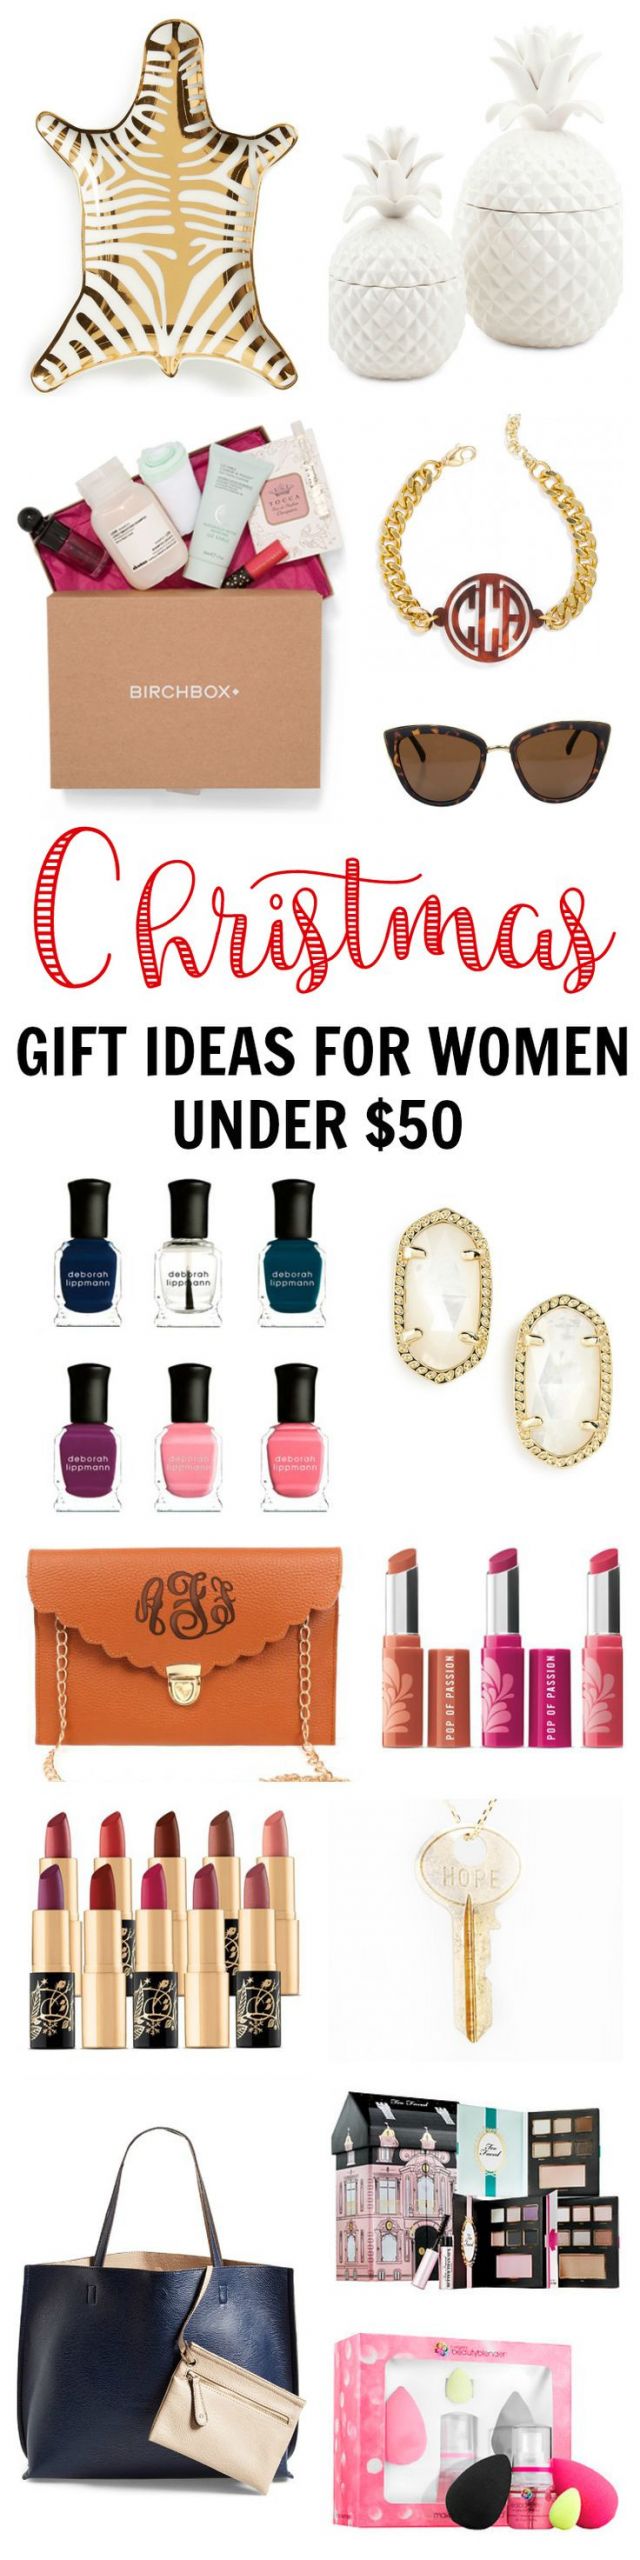 Girlfriend Gift Ideas 2020
 Christmas Gift Ideas for Women under $50